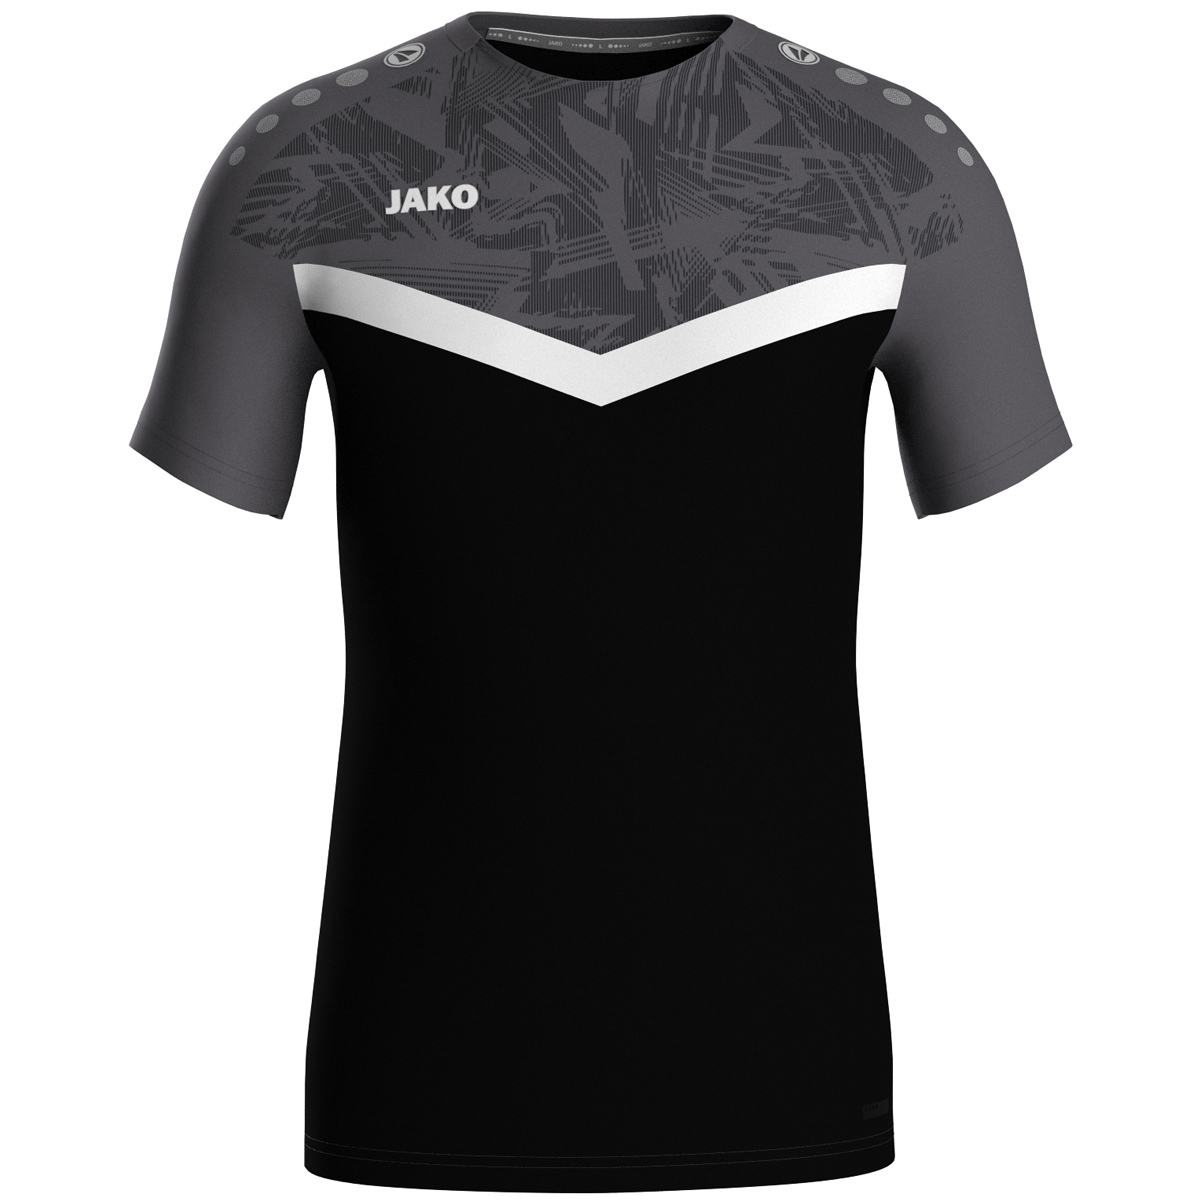 JAKO T-Shirt Iconic, XXL, schwarz/anthrazit